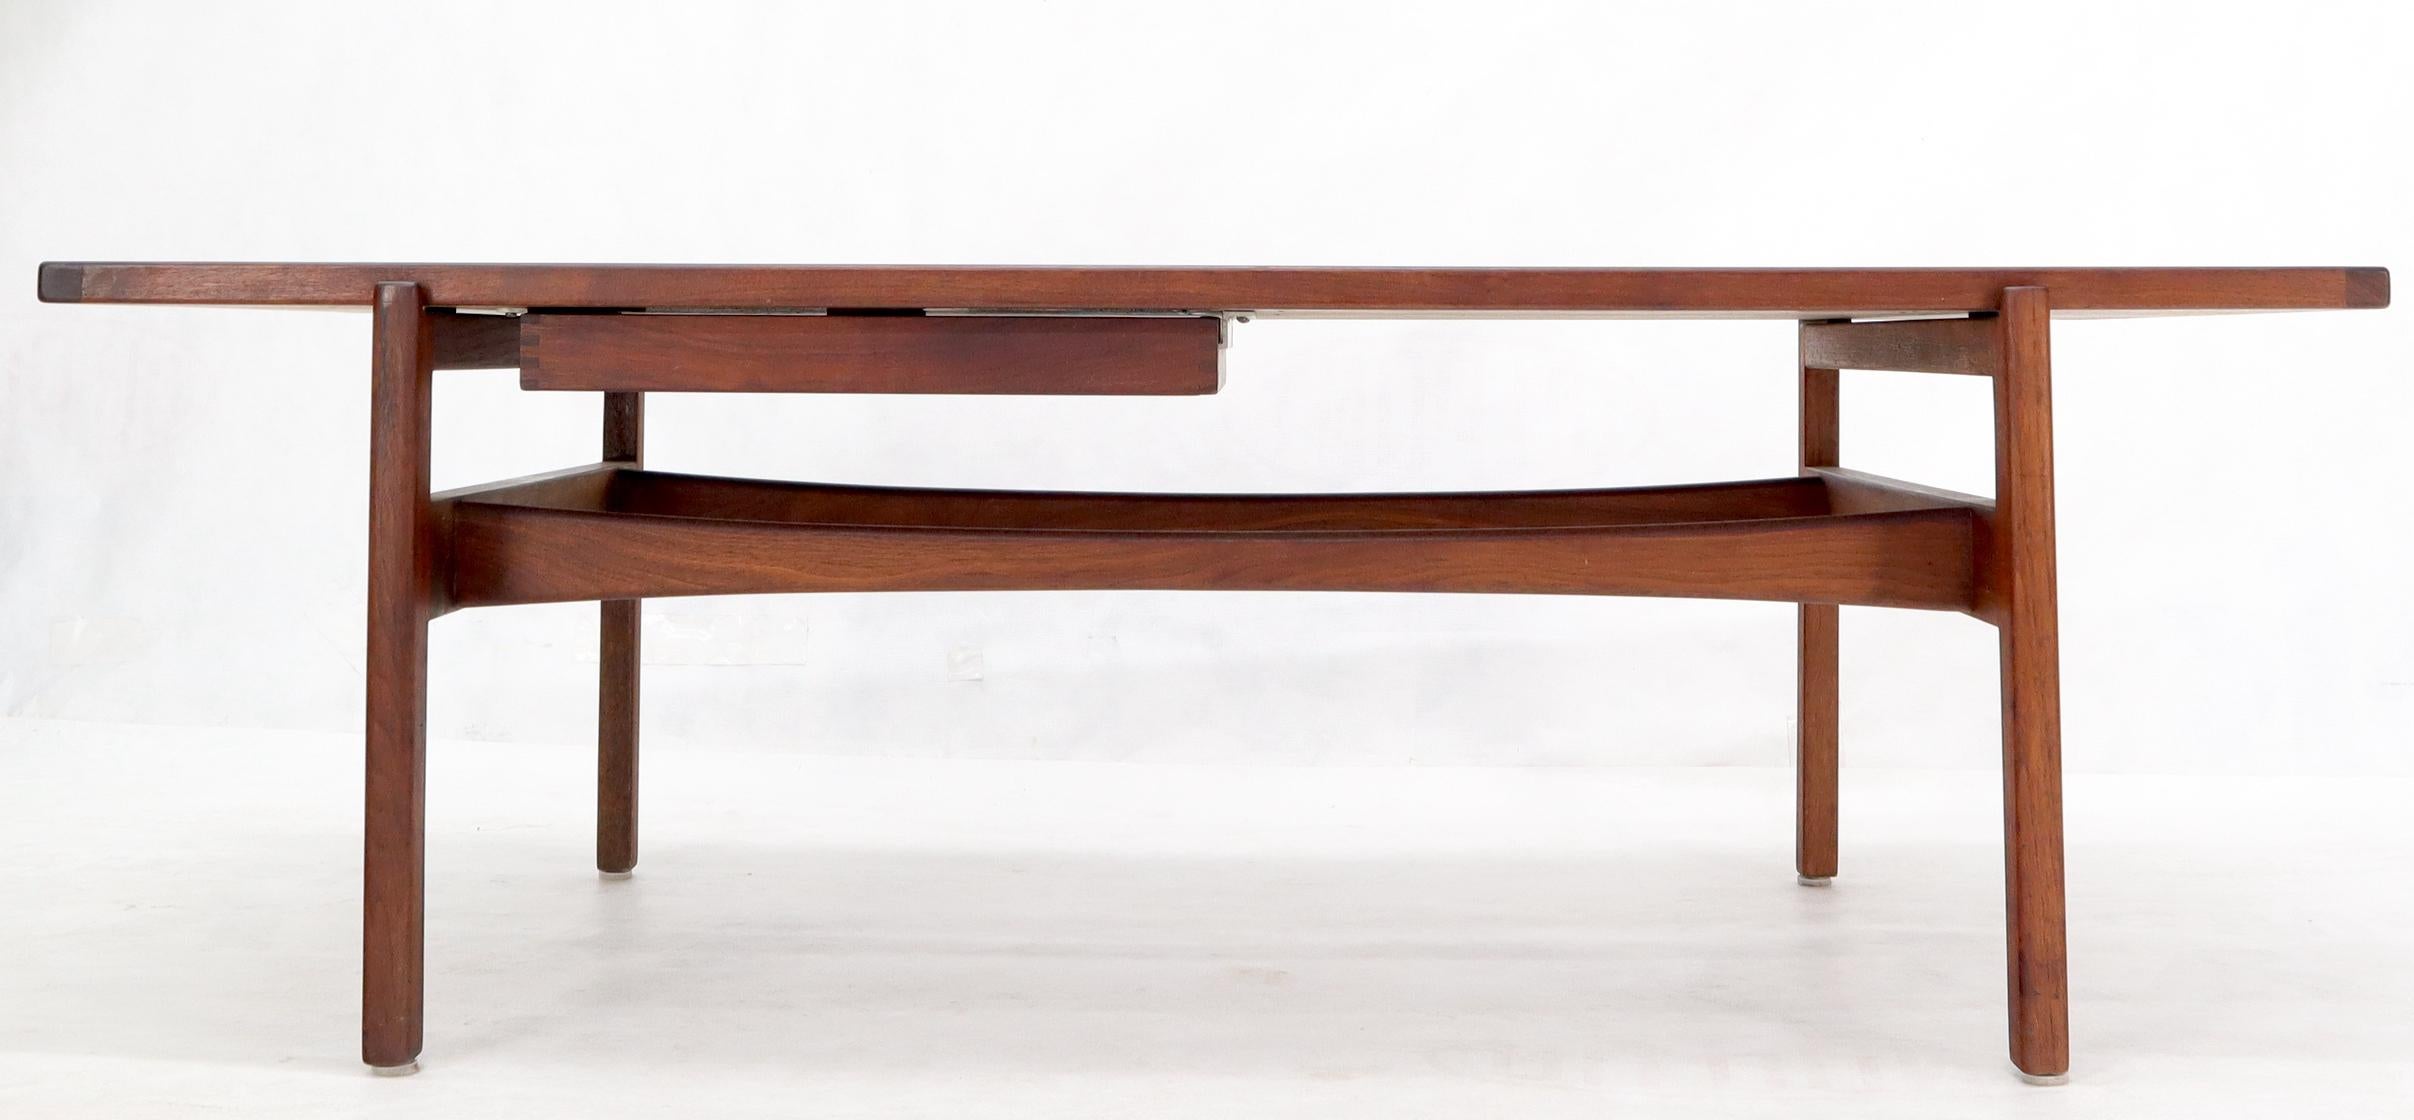 One Drawer Rectangle Shape Teak Danish Mid-Century Modern Coffee Table For Sale 1